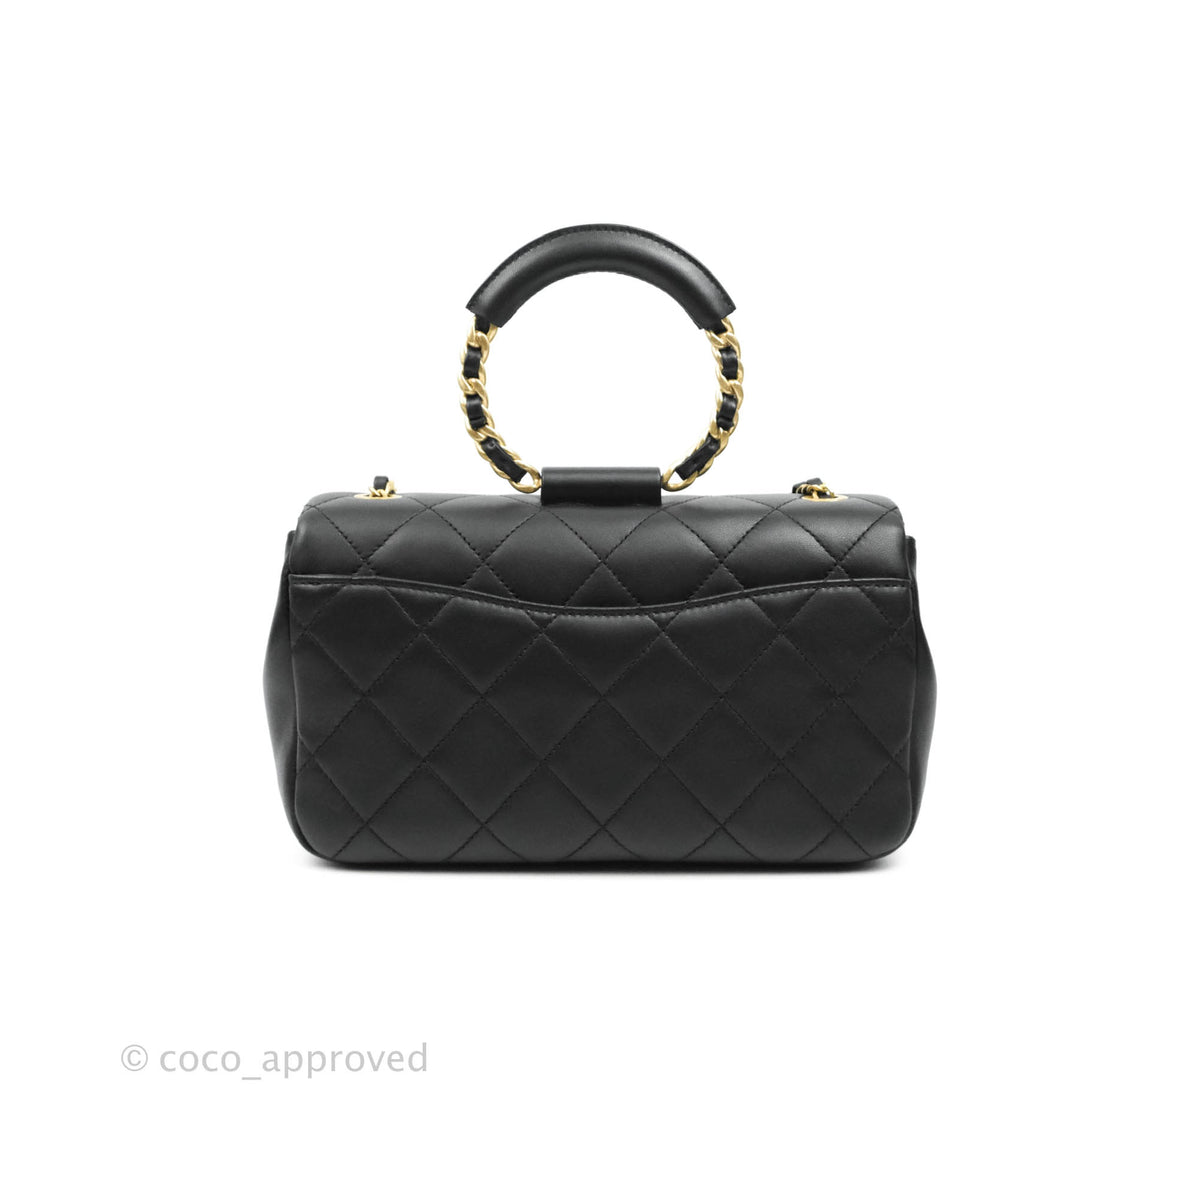 Lot 700: Chanel Kelly Top Handle Turquoise Bag, Medium